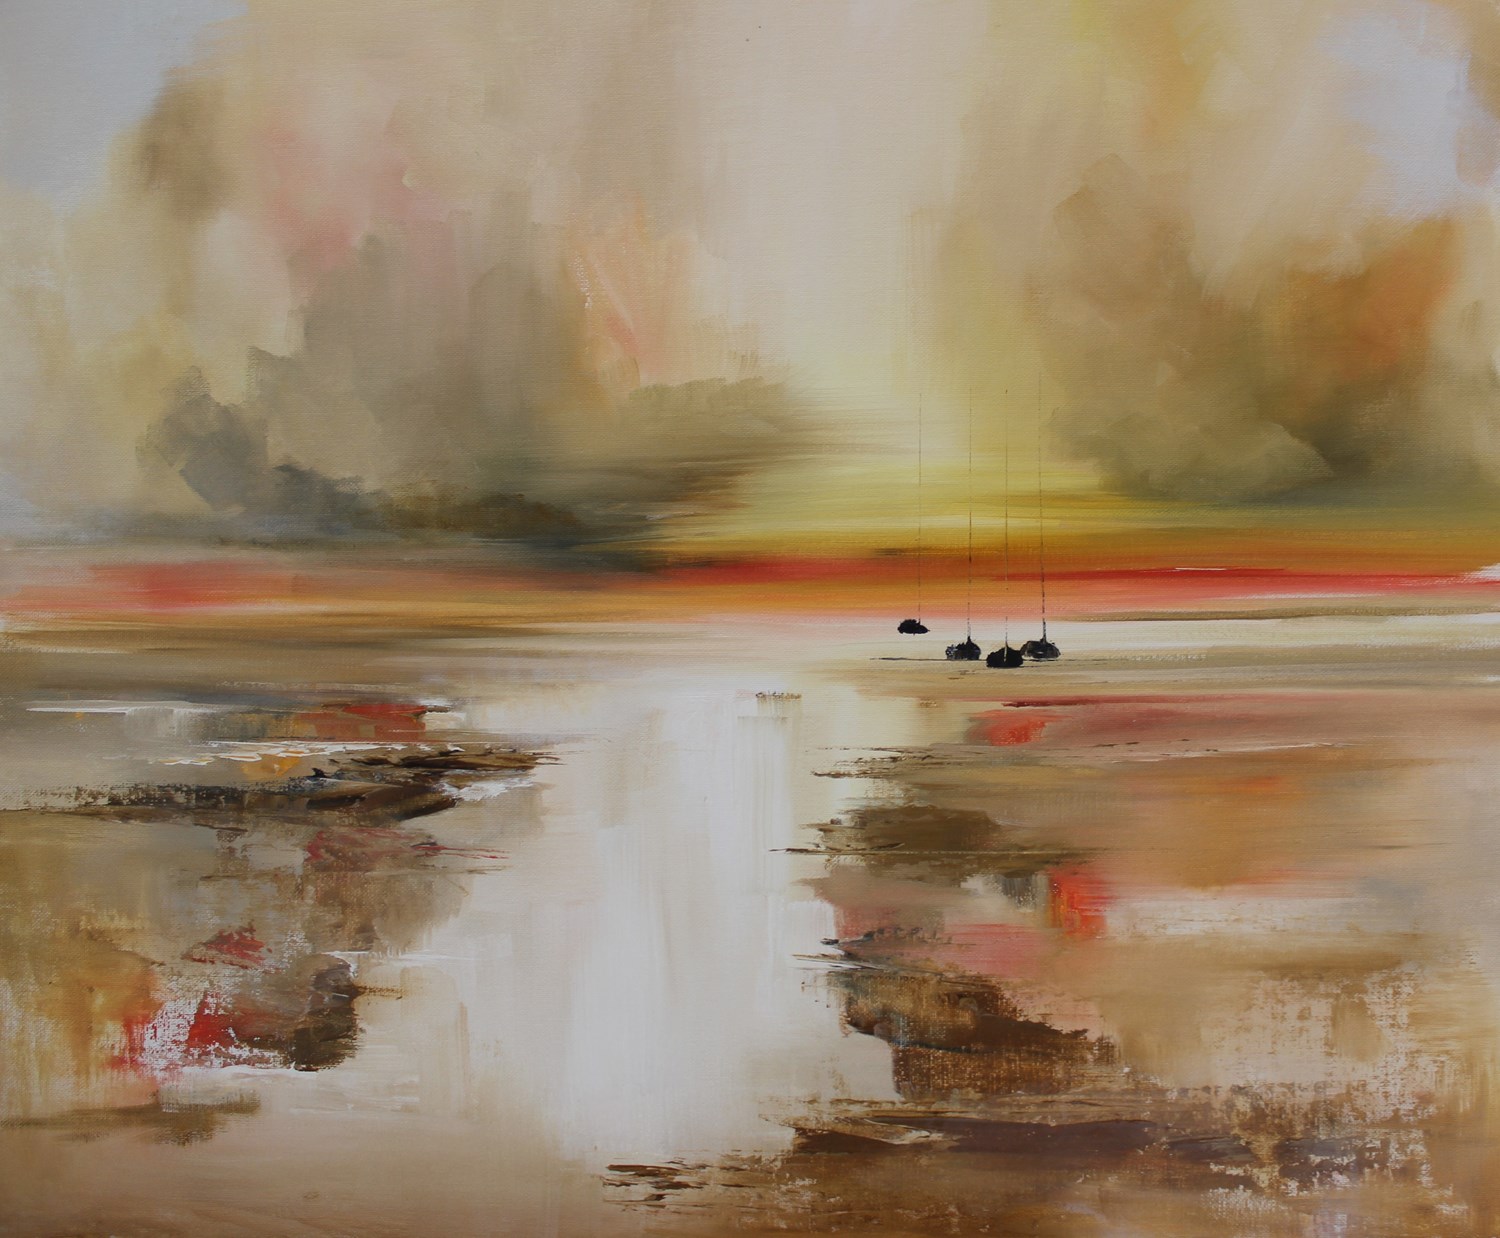 'Sun dipping on the horizon ' by artist Rosanne Barr